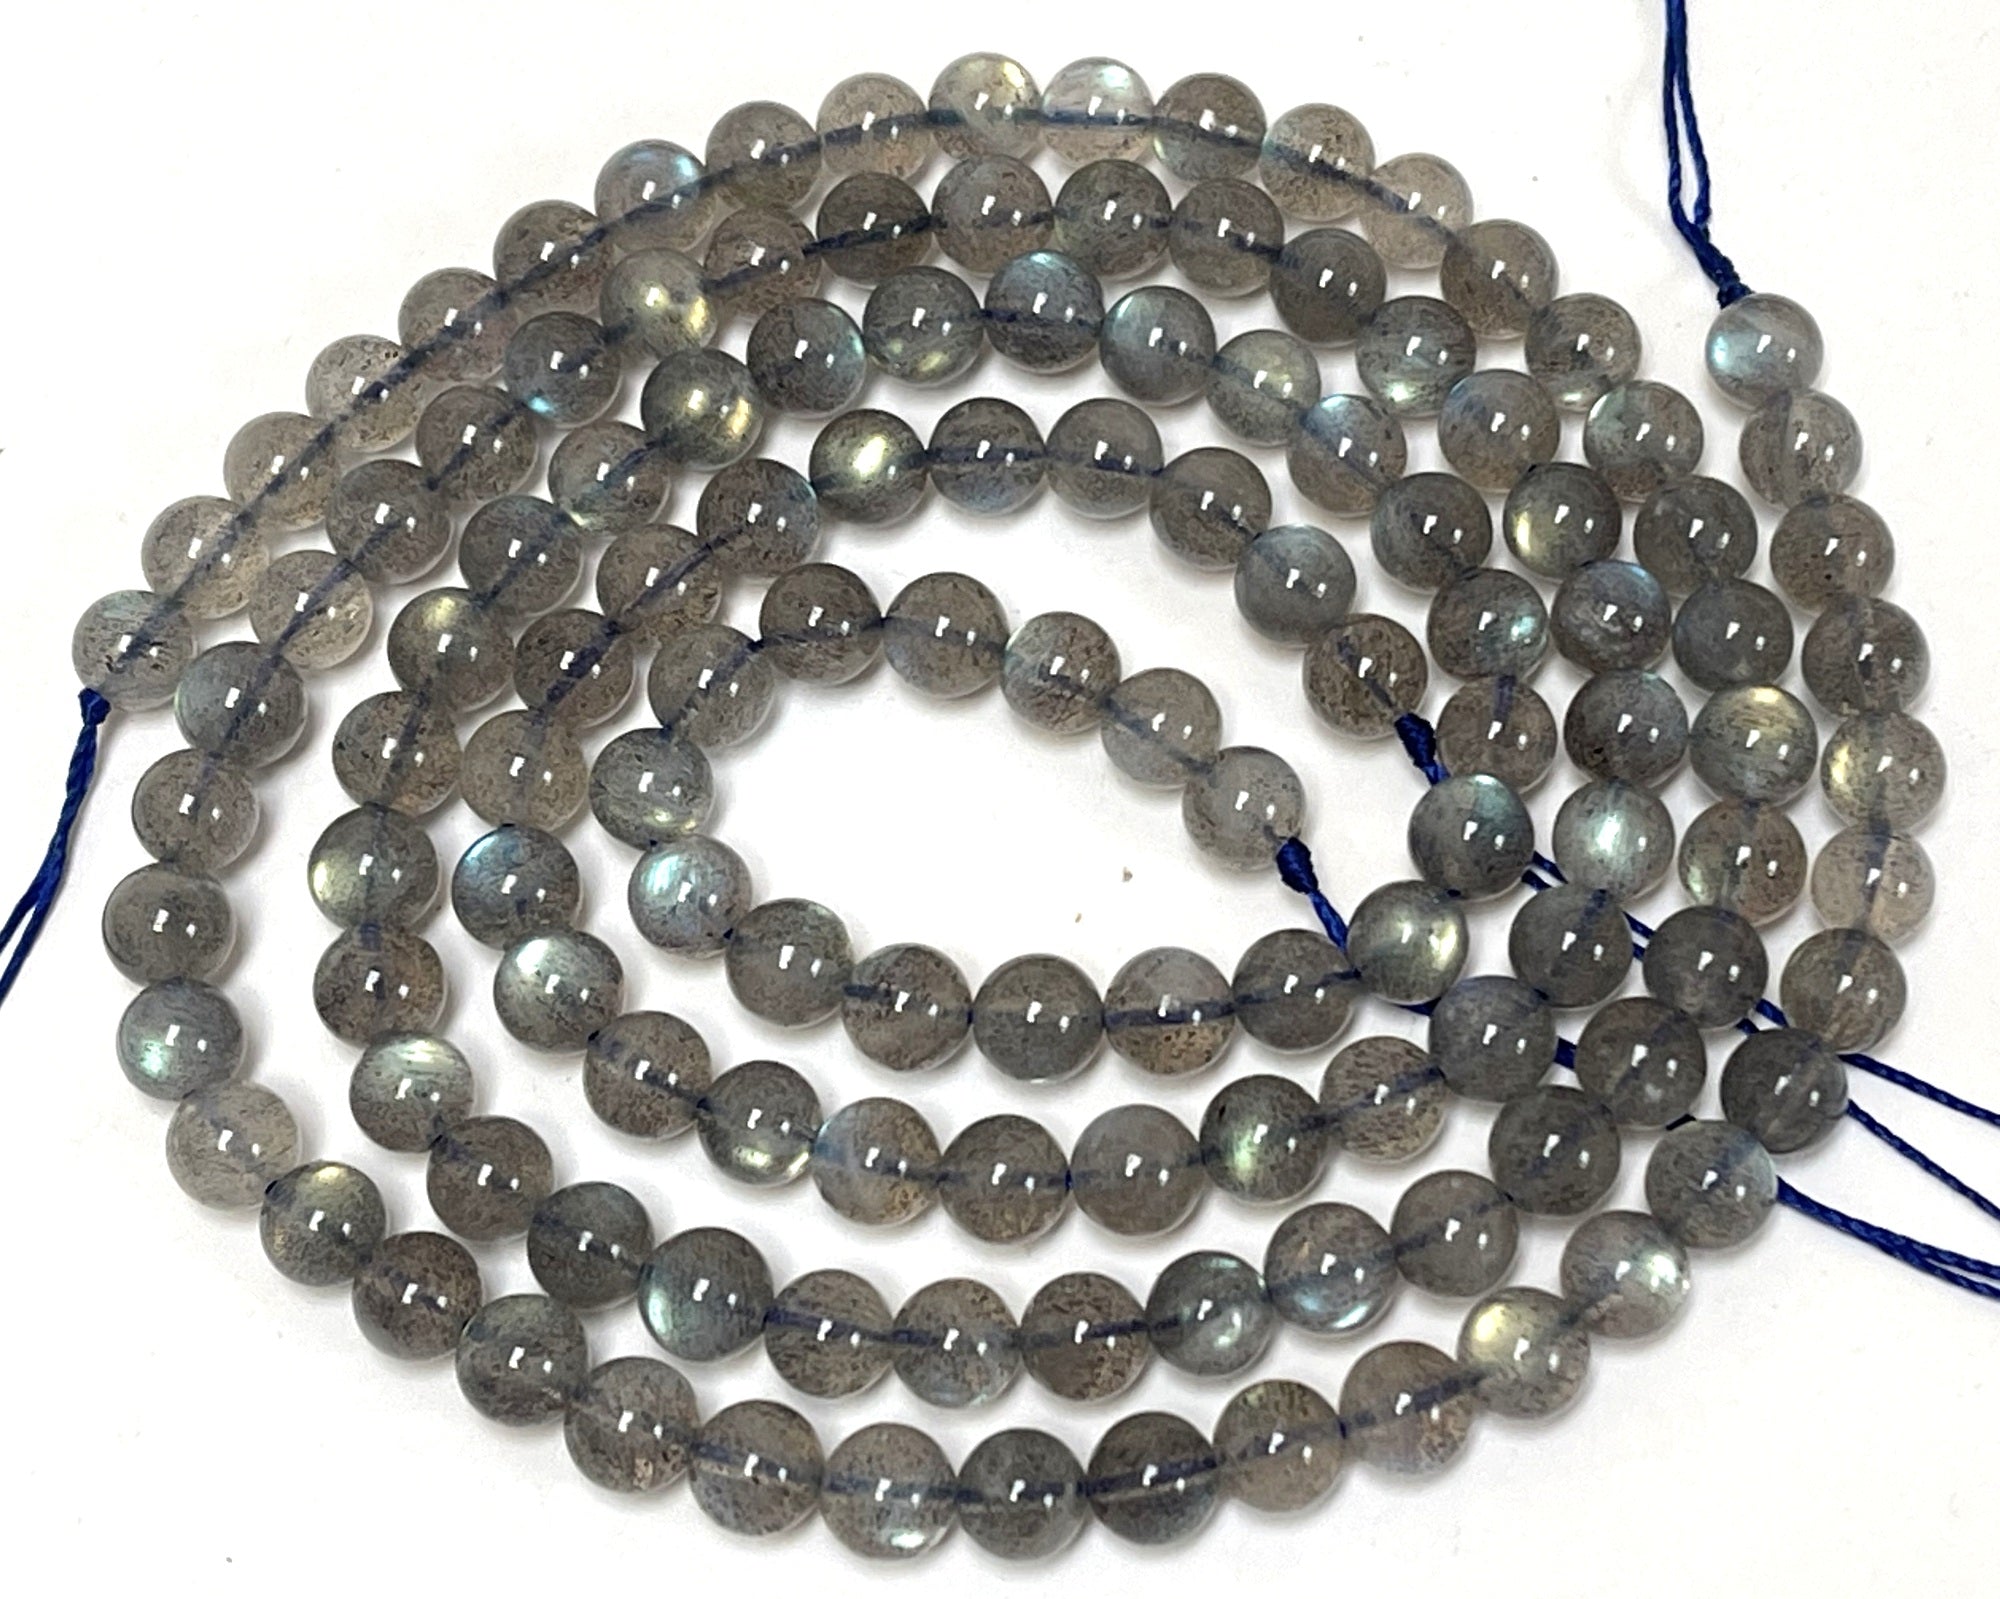 Madagascar Labradorite 6mm round rare flashy natural gemstone beads 15.5" strand